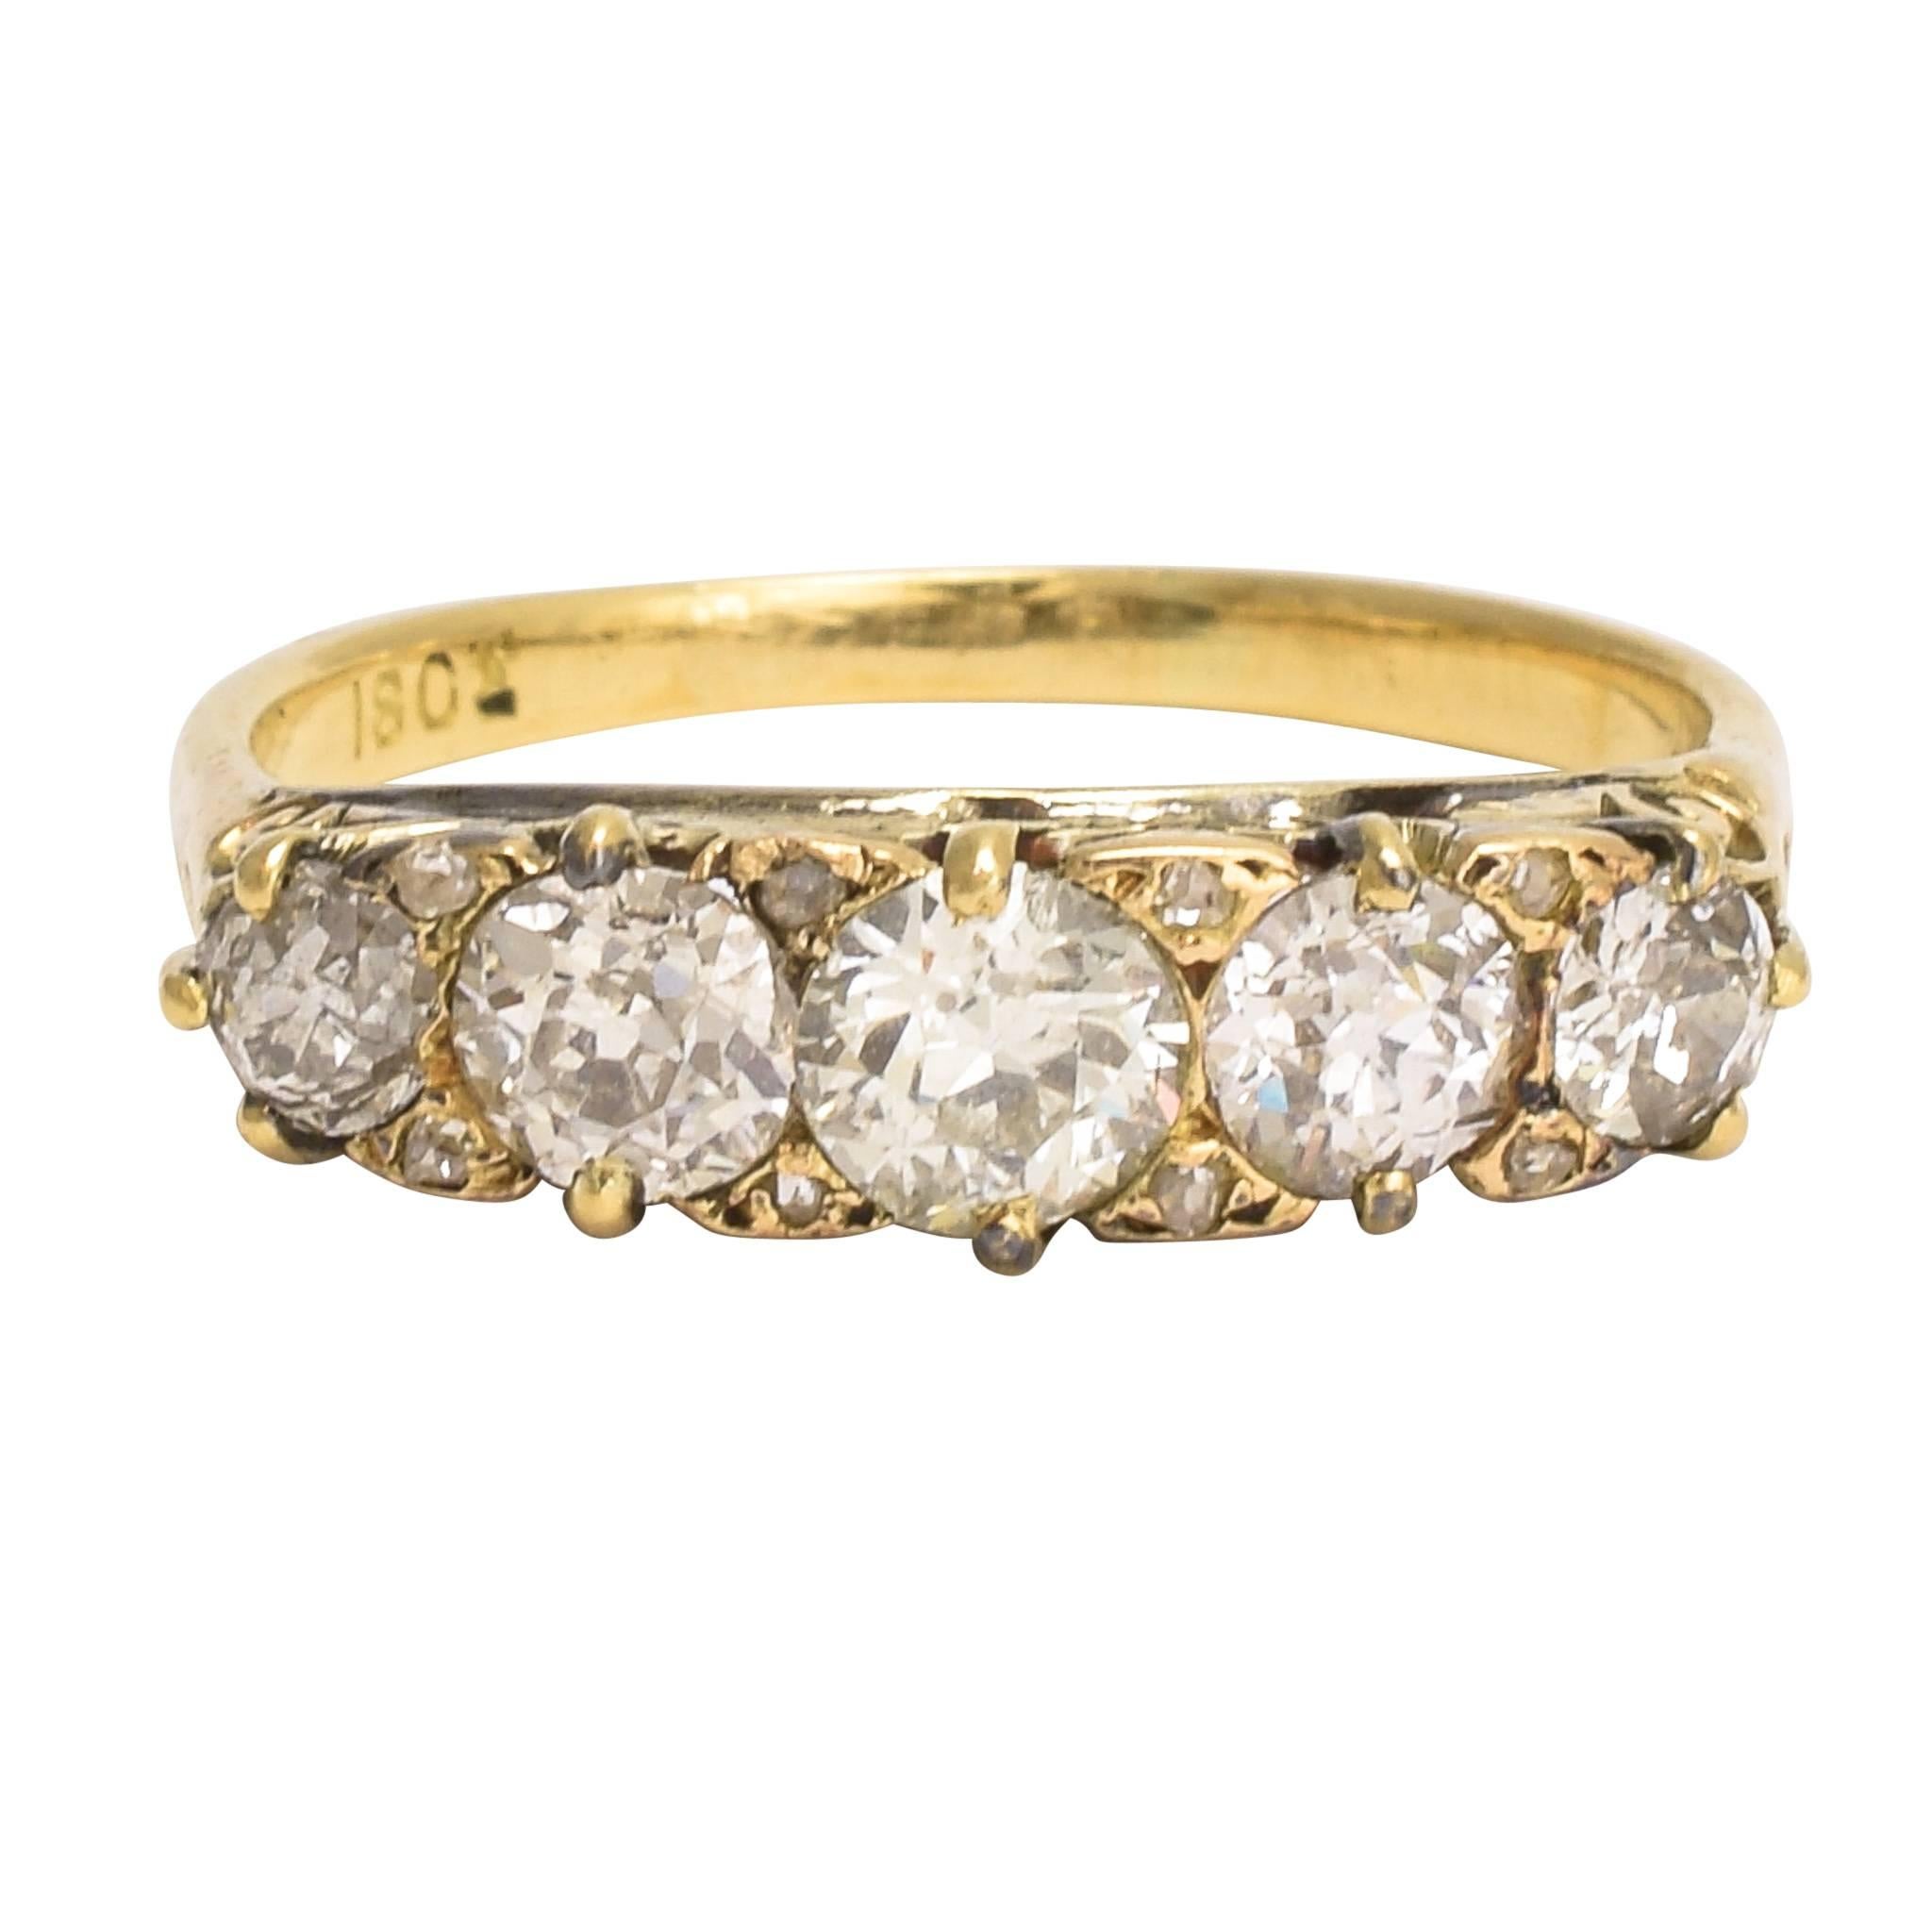 Mid-Victorian 1.75 Carat Diamond Five-Stone Ring